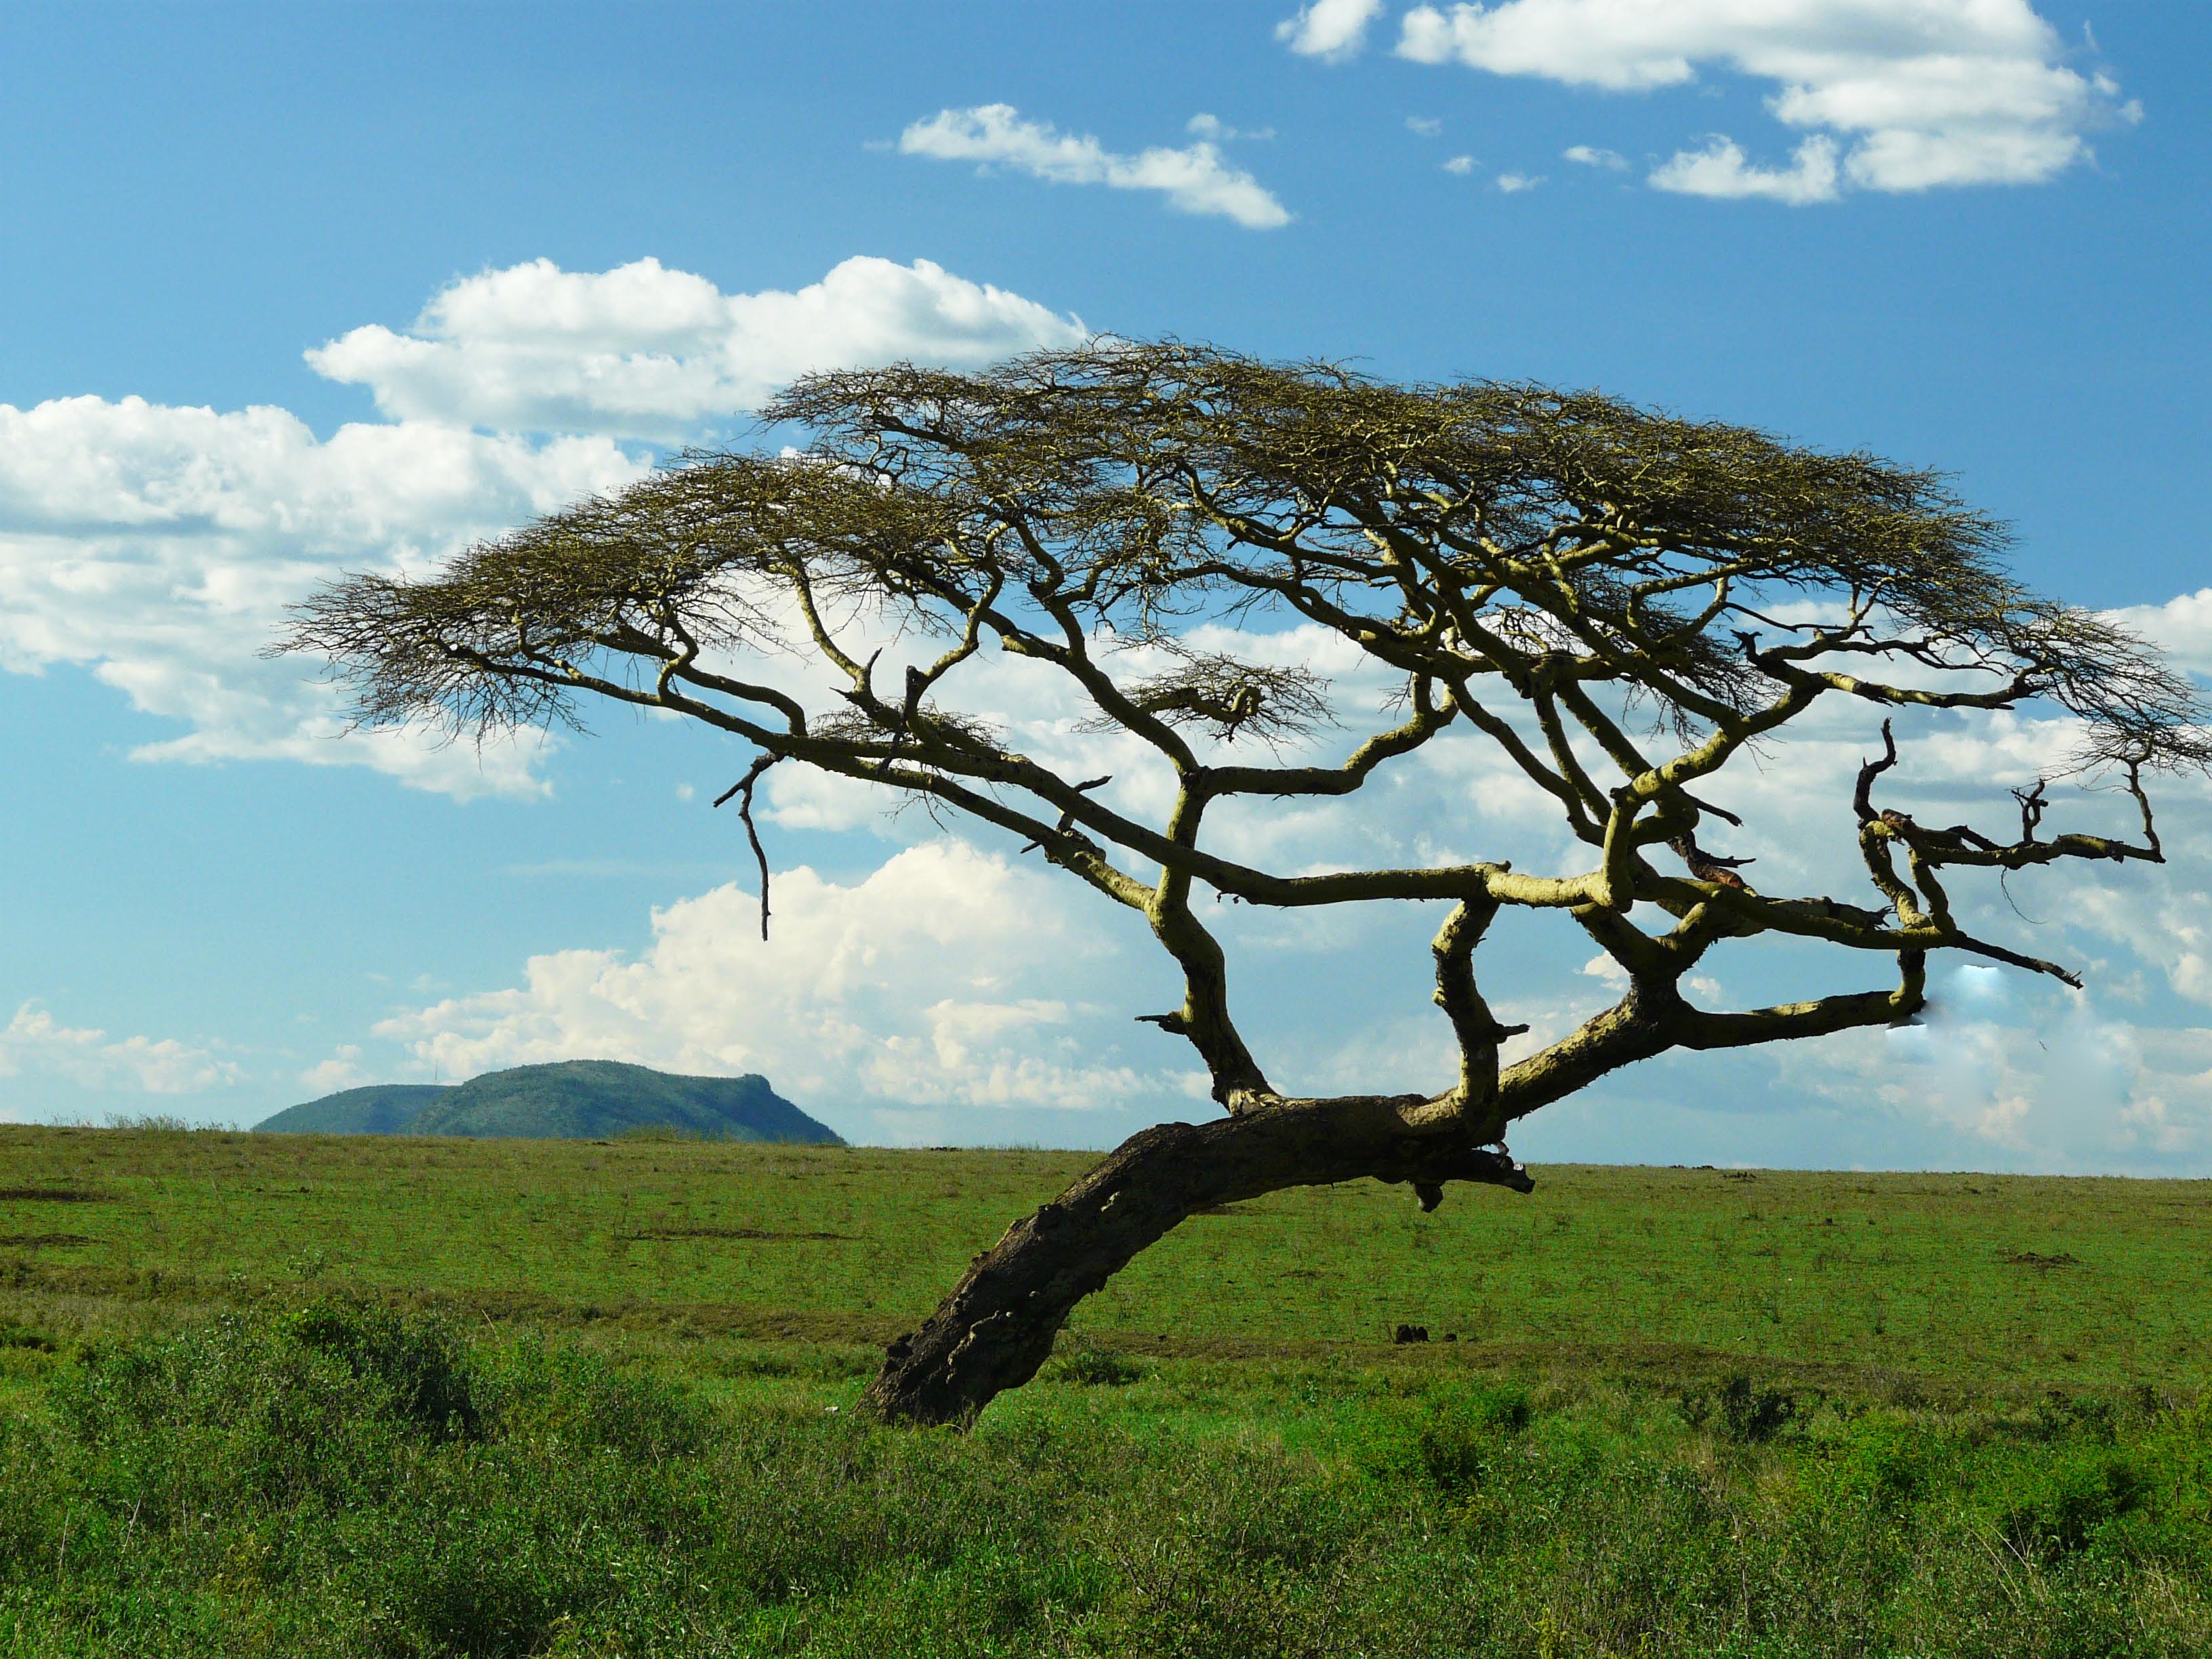 Scattered Acacia Trees, Kenya, Africa загрузить